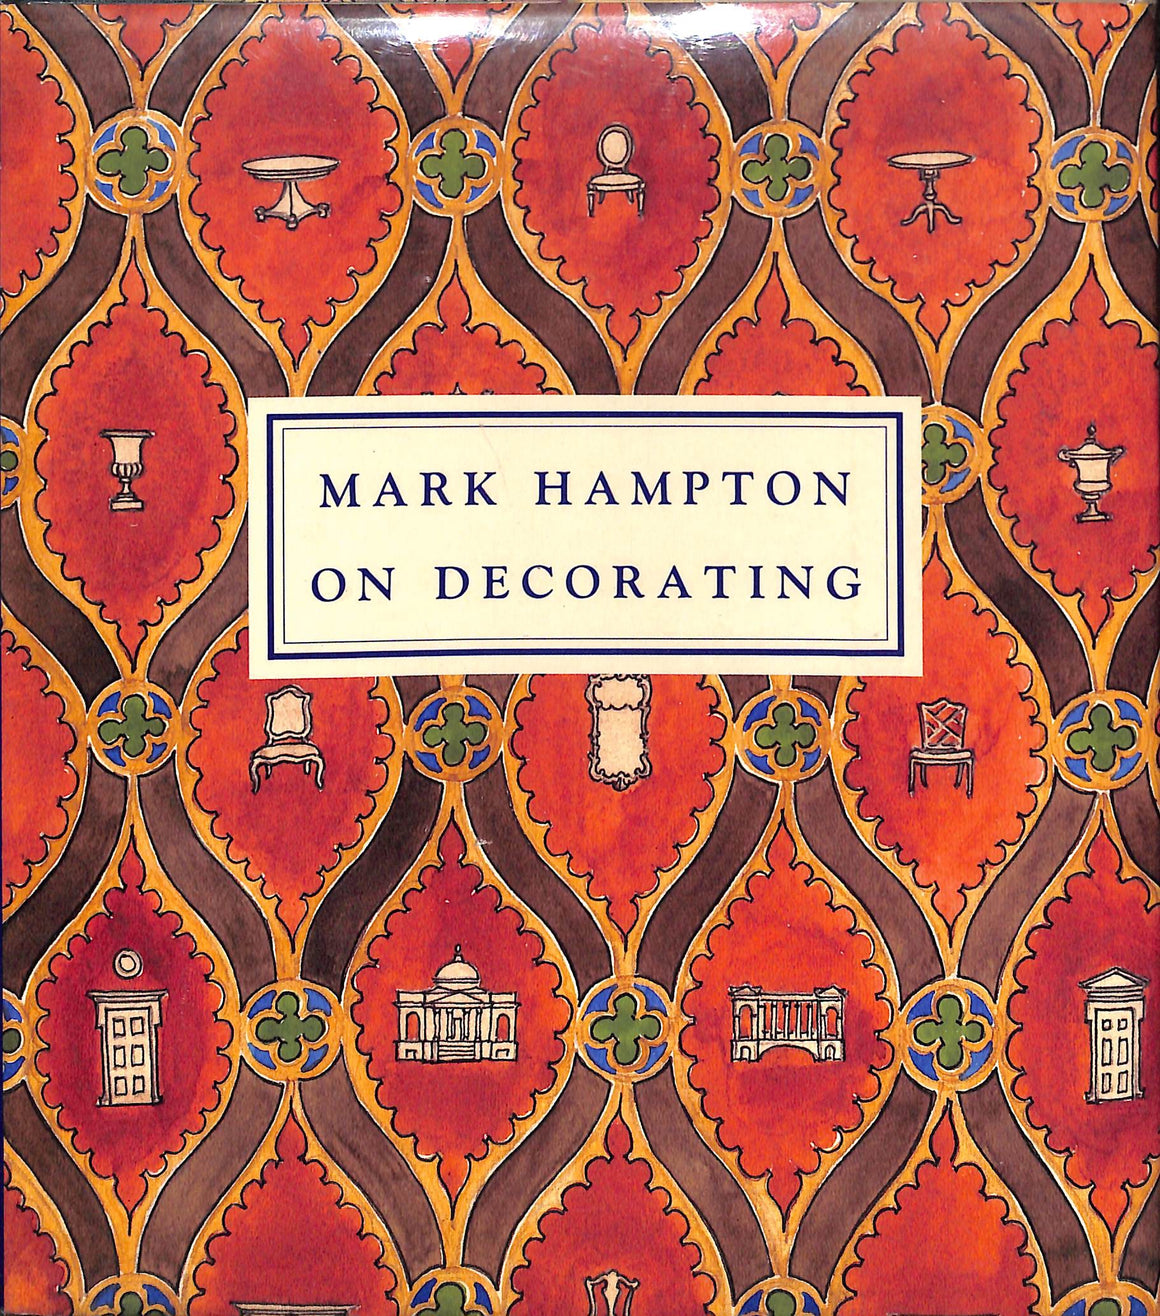 "Mark Hampton On Decorating" 1989 HAMPTON, Mark (SOLD)